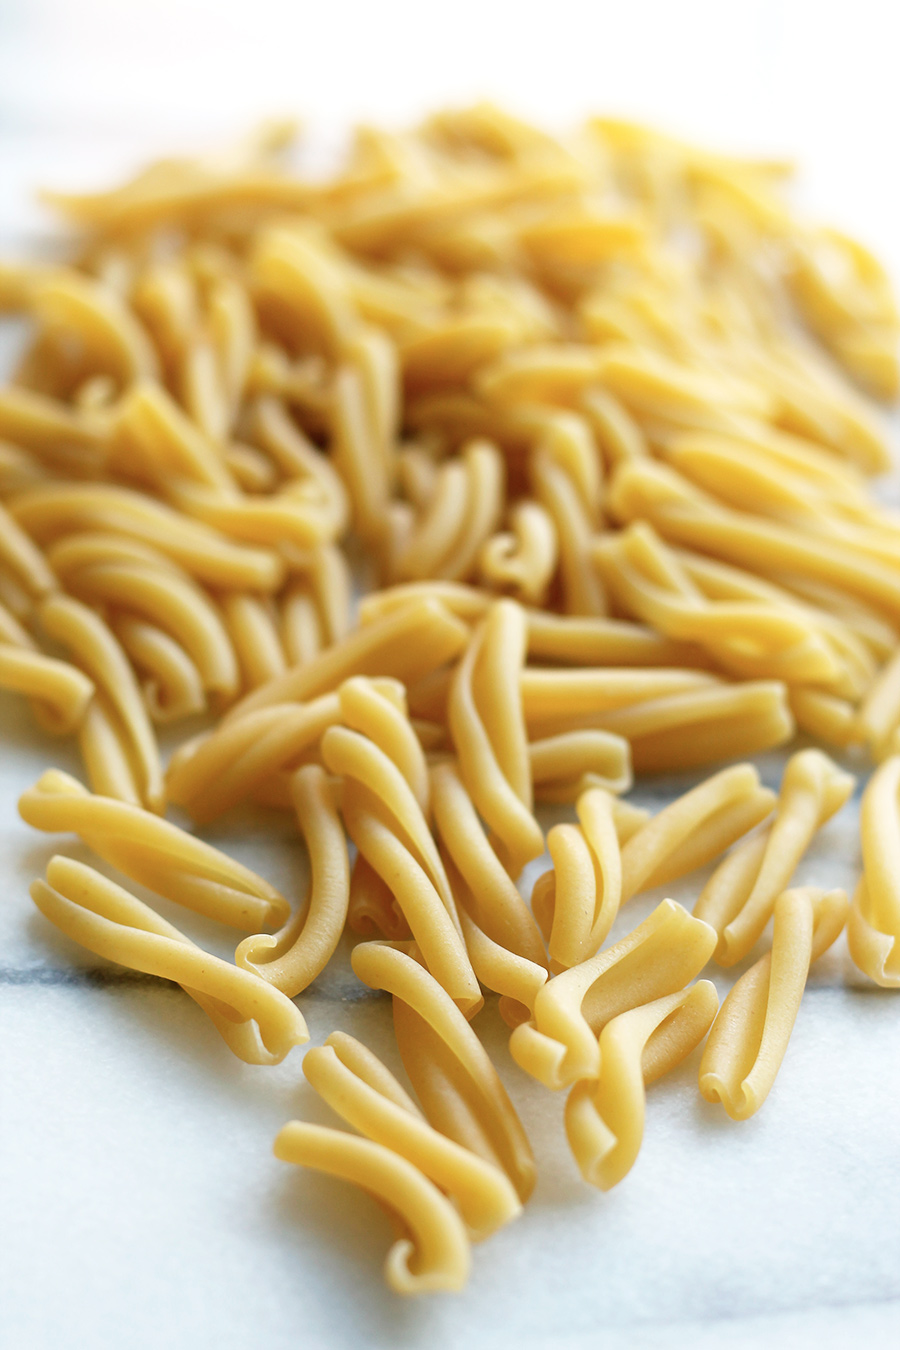 Uncooked casarecce pasta noodles